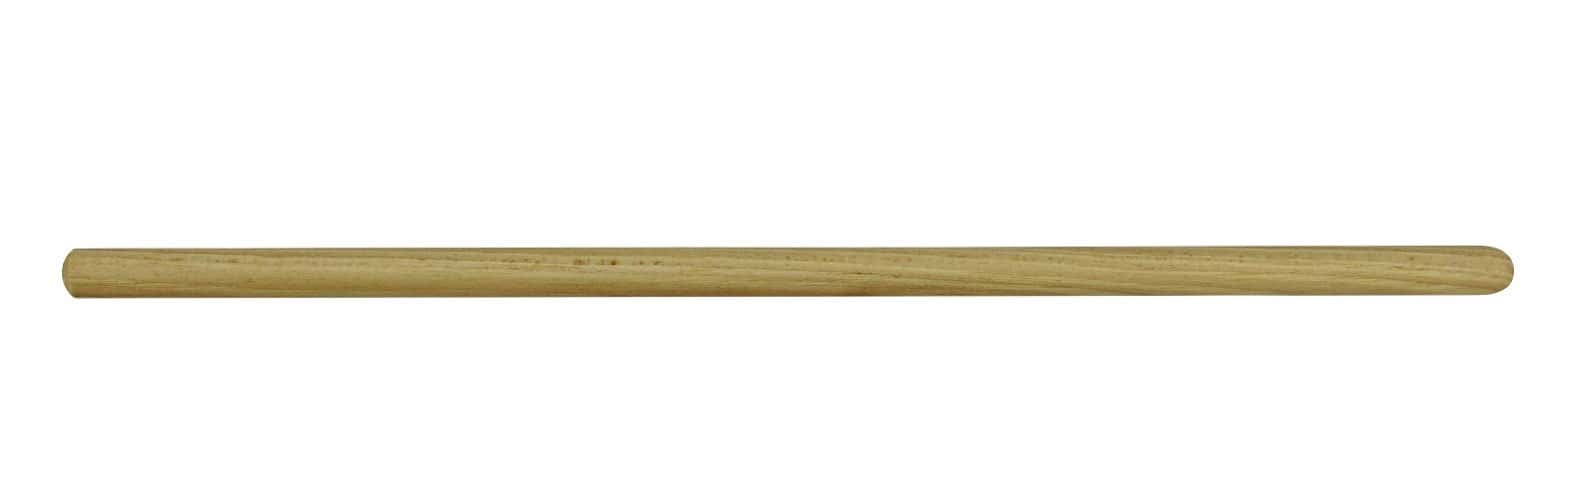 Contemporanea C-ba02 - Baguette Agogo/tamborim Hickory, 28,5cm 10mm